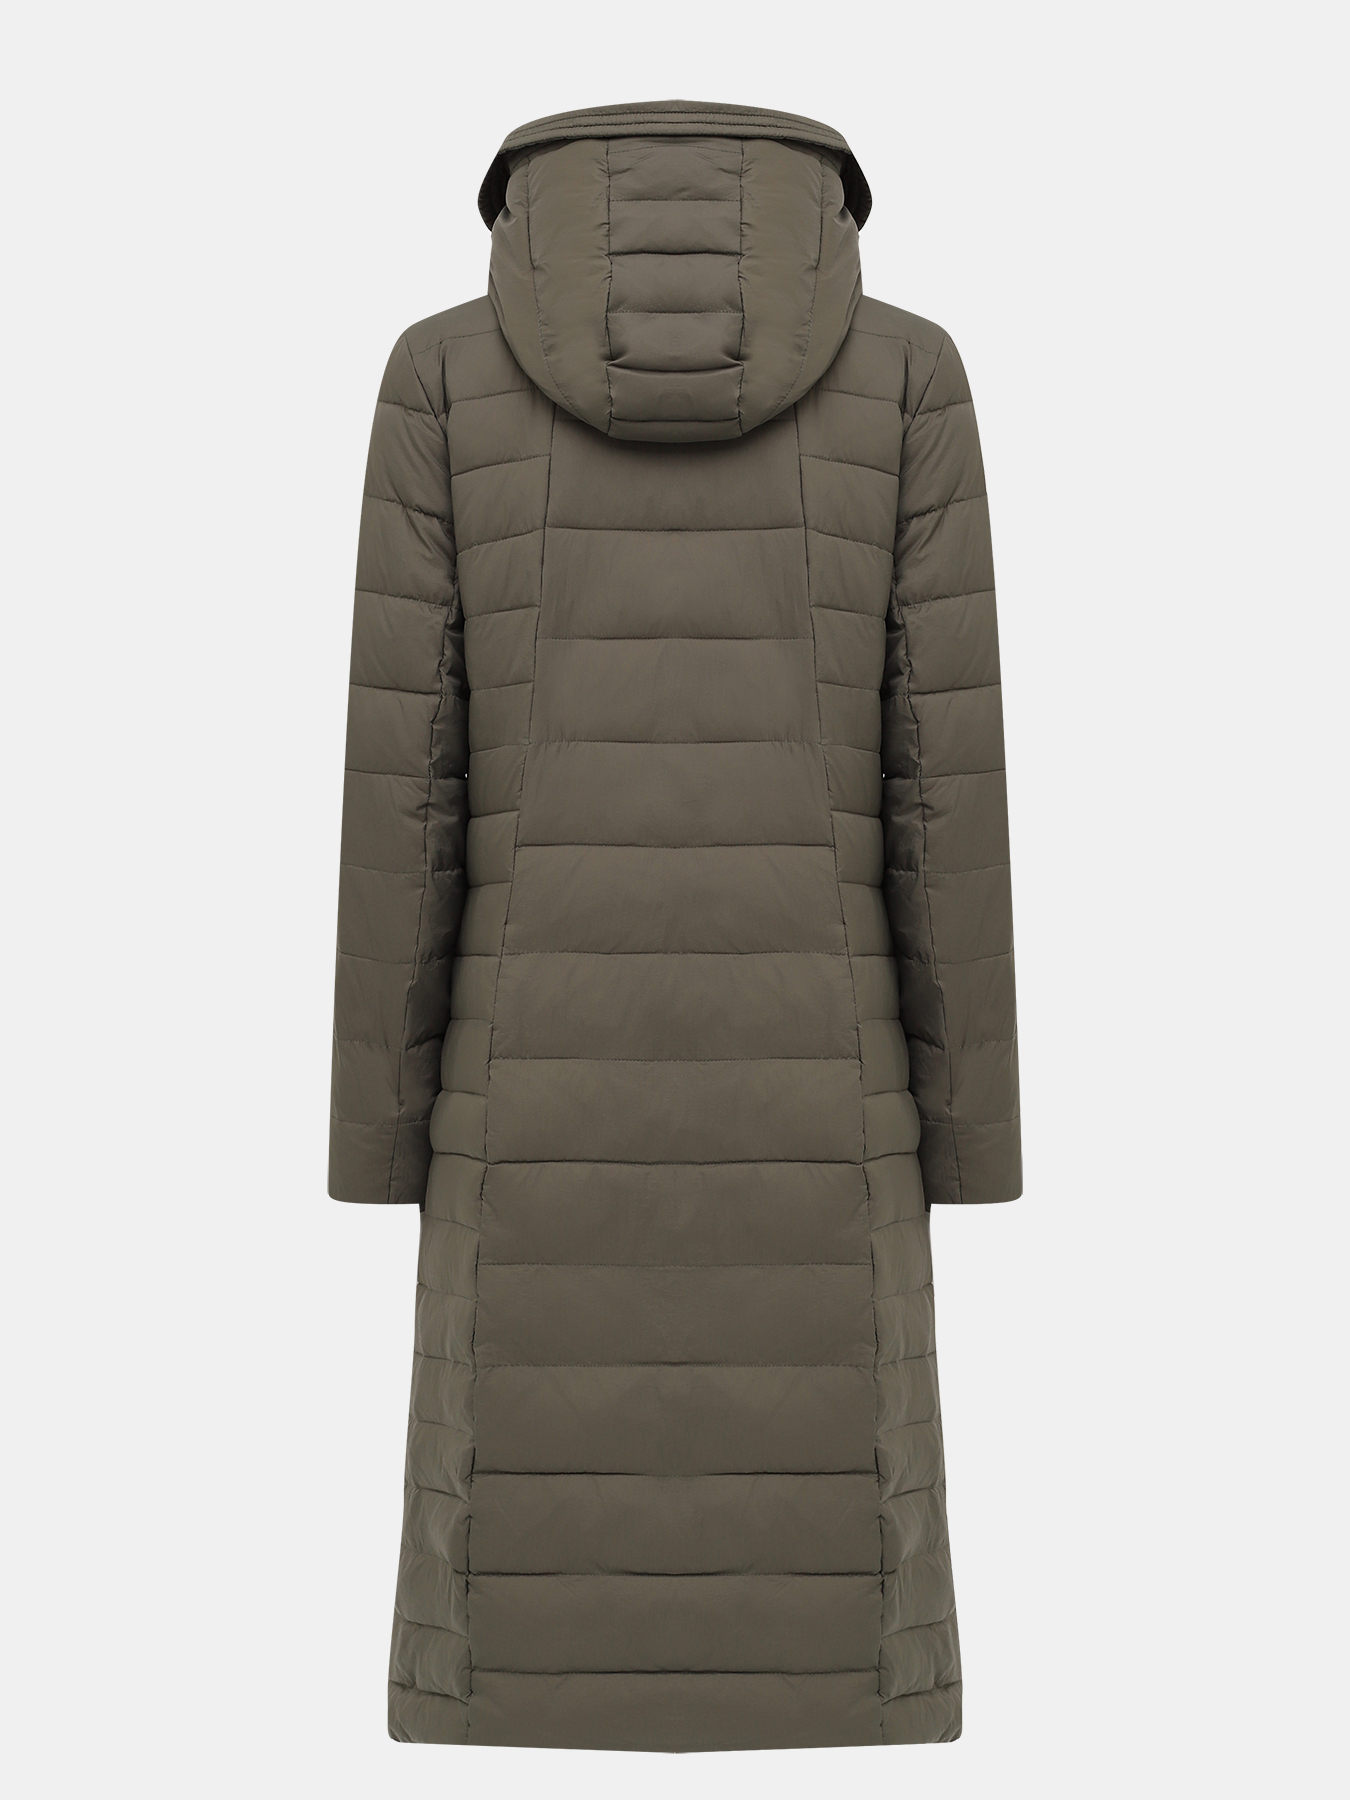 Пальто зимнее Alessandro Manzoni Purpur 384502-191, цвет хаки, размер 48-50 - фото 2